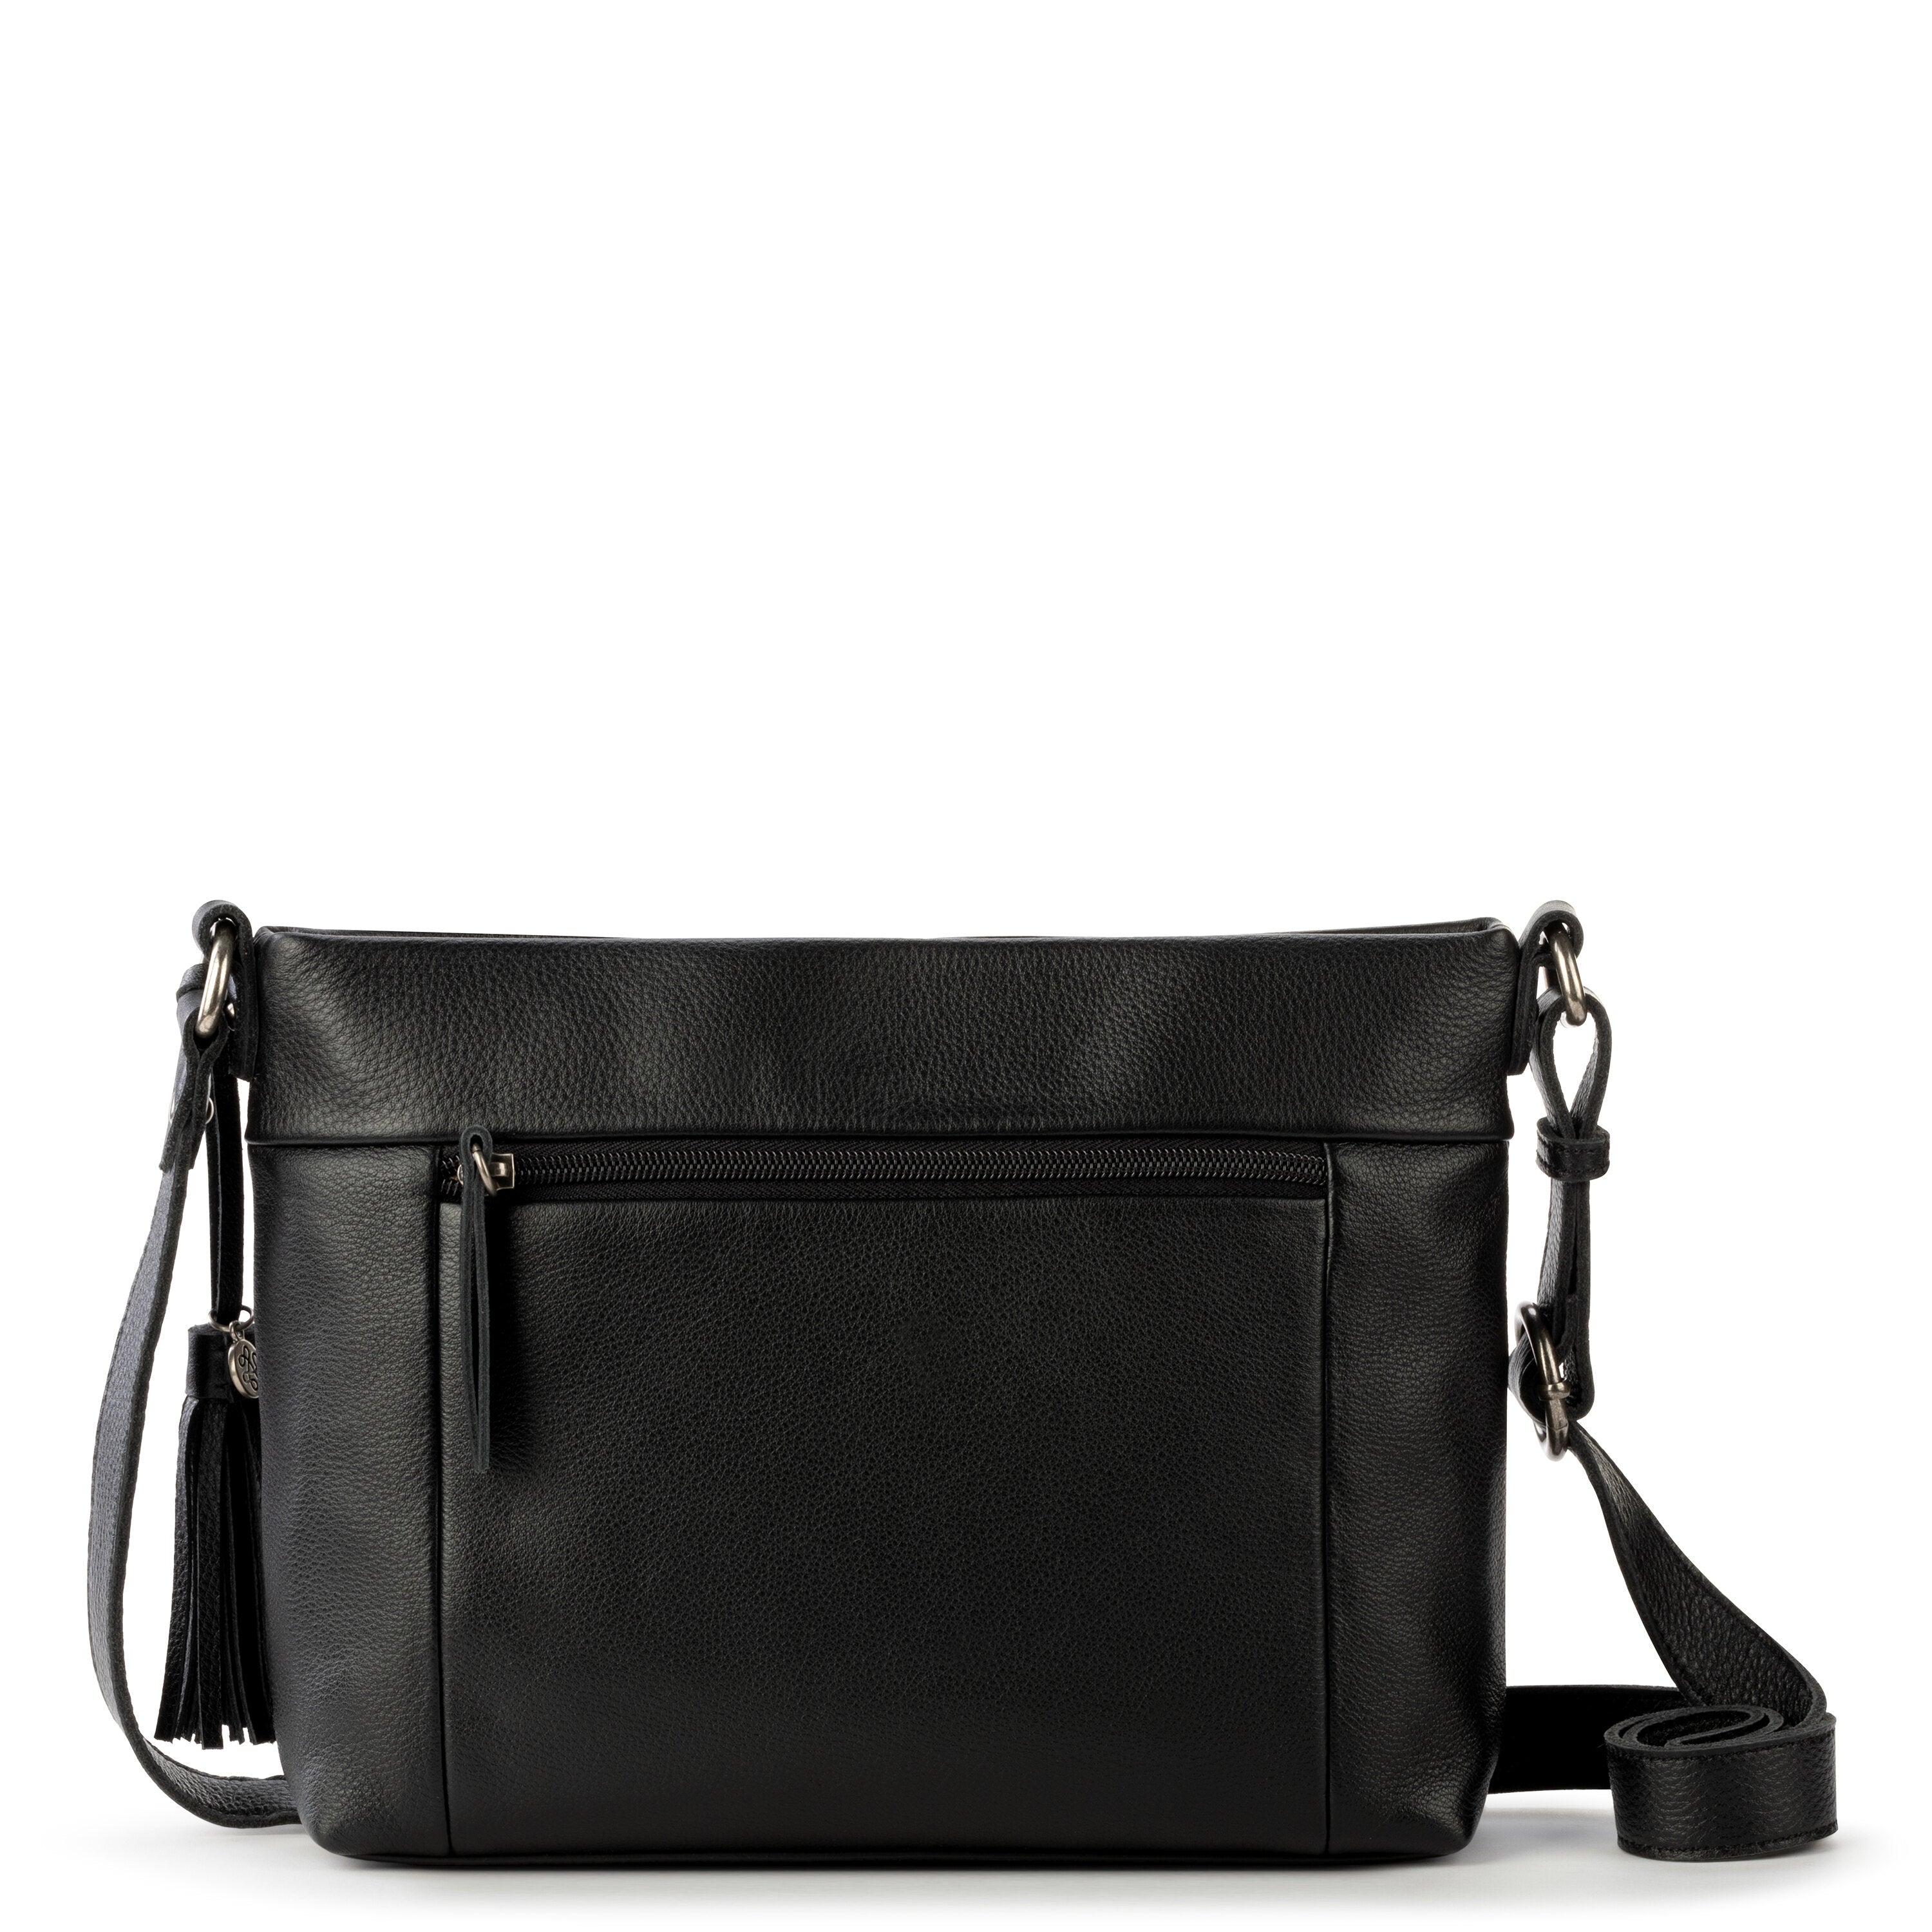 The Sak Black Large Soft Leather Satchel - Women's handbags